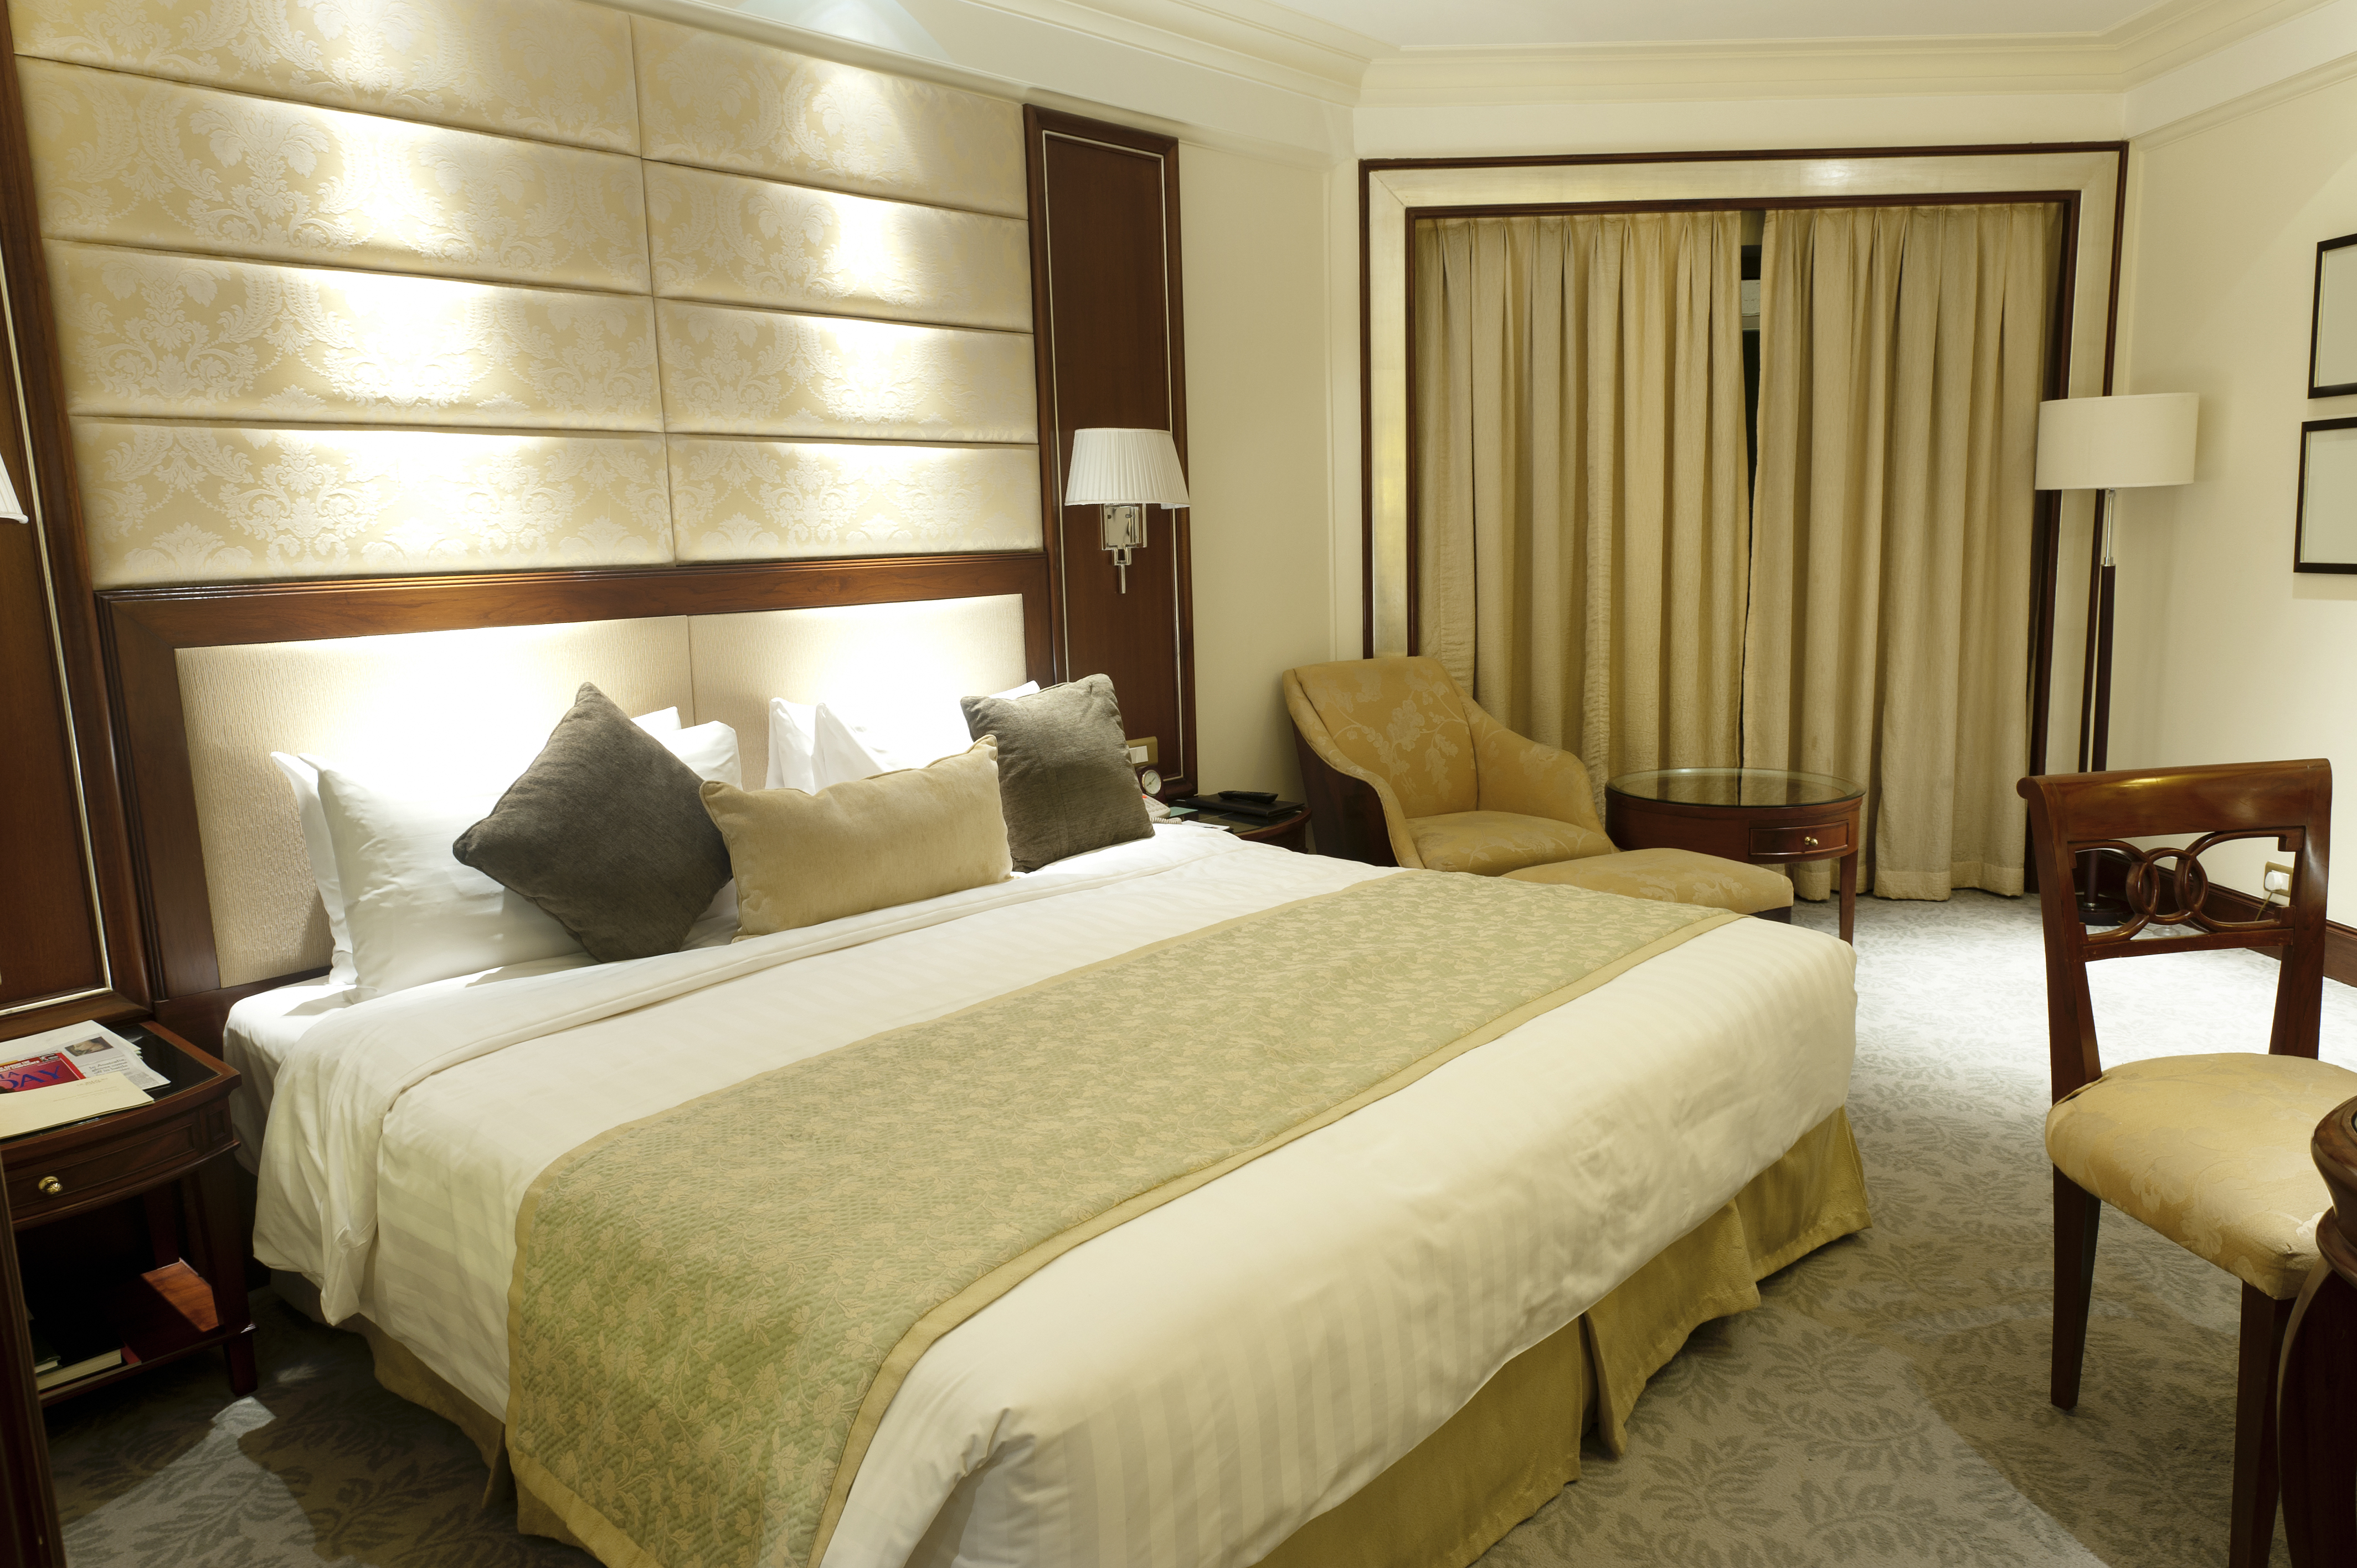 Luxury Shangri-la Hotel Room â€“ TechCrunch